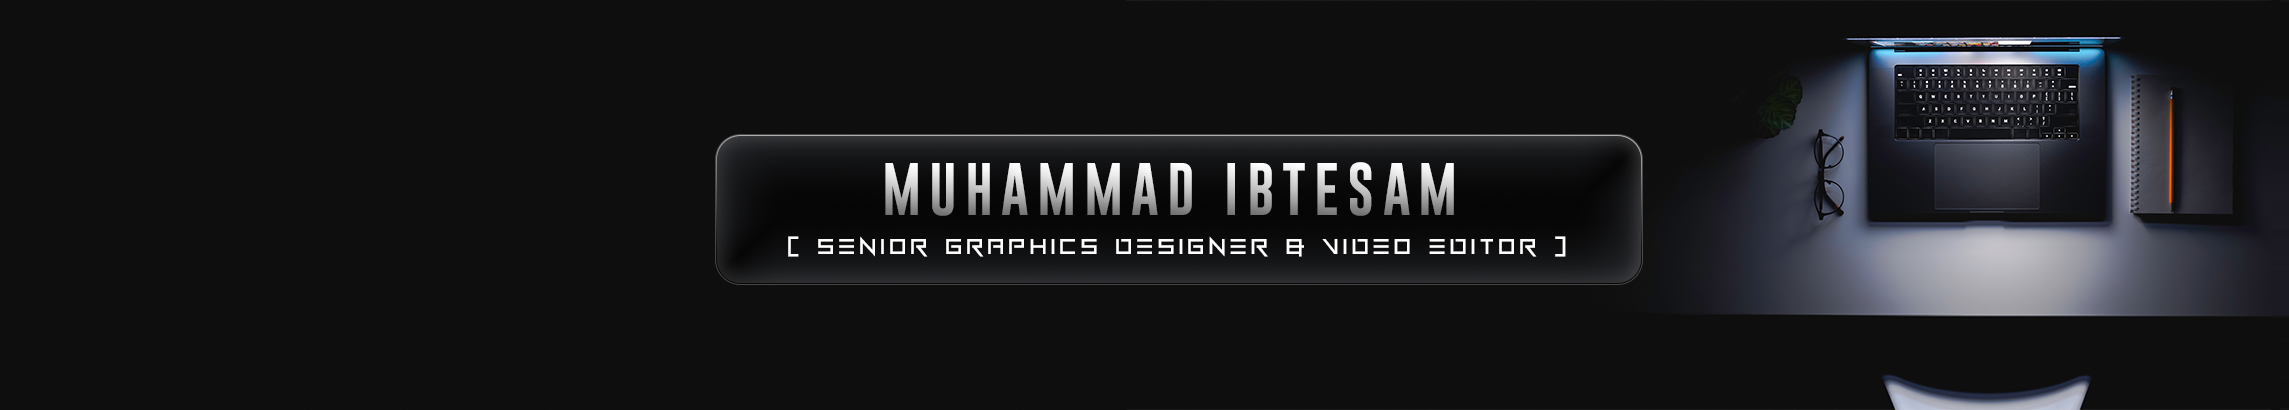 MUHAMMAD IBTESAM's profile banner